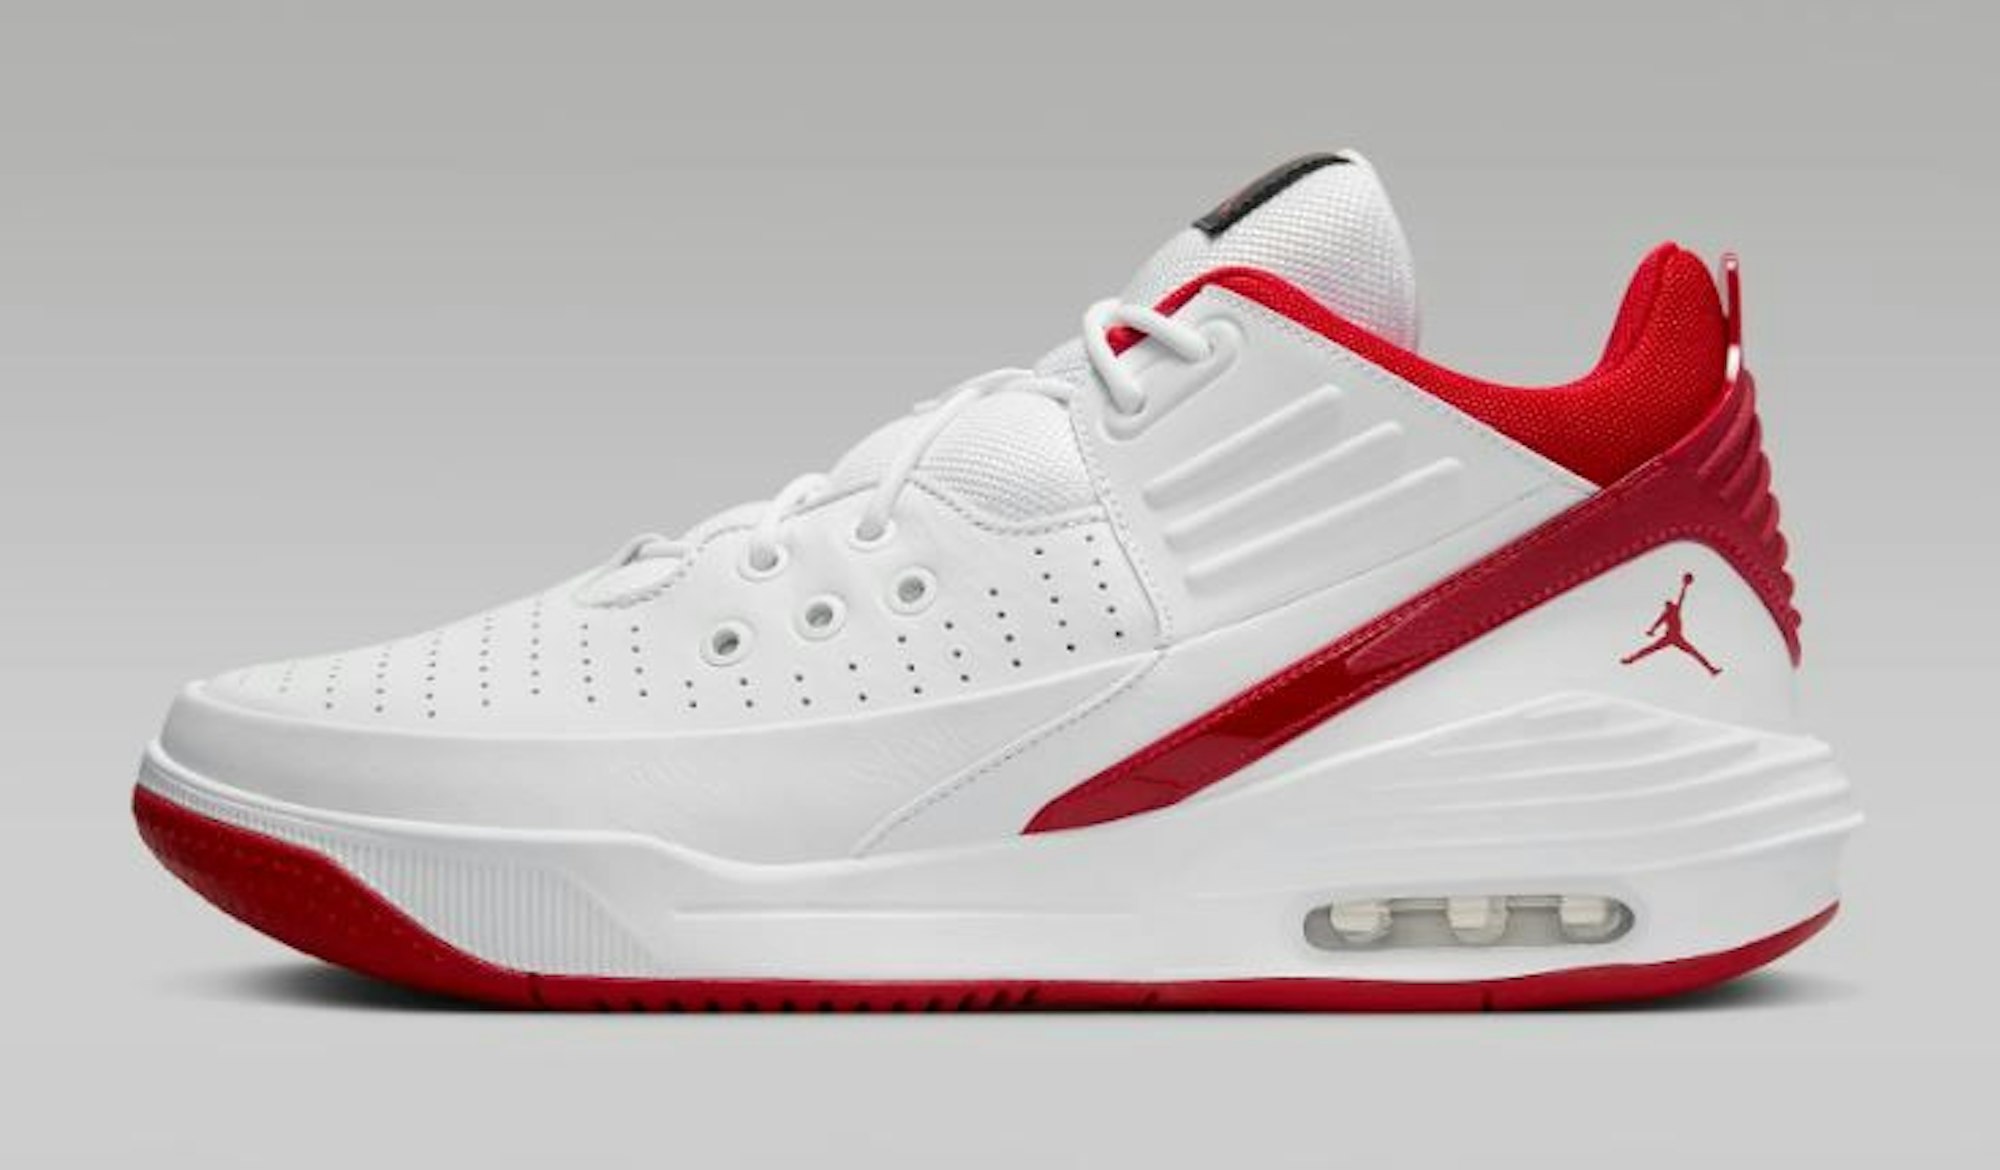 NIke Jordan Max Aura 5 Sneaker in weiß Rot.